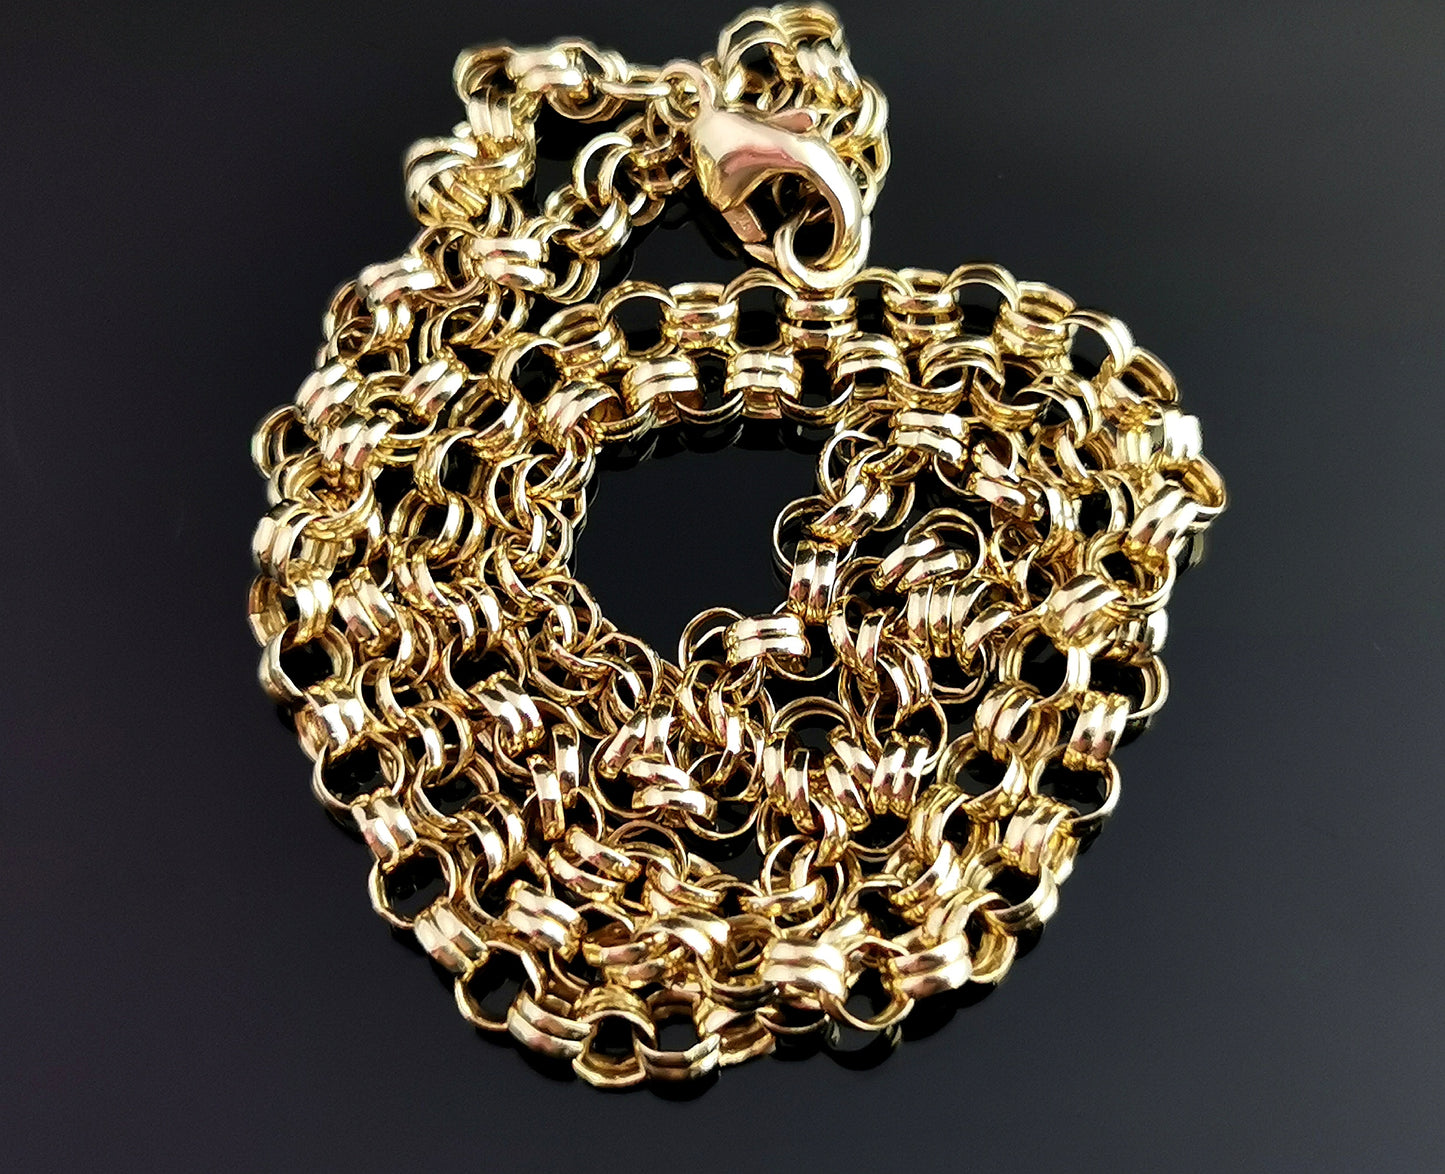 Vintage 9ct gold rolo link chain necklace, belcher link